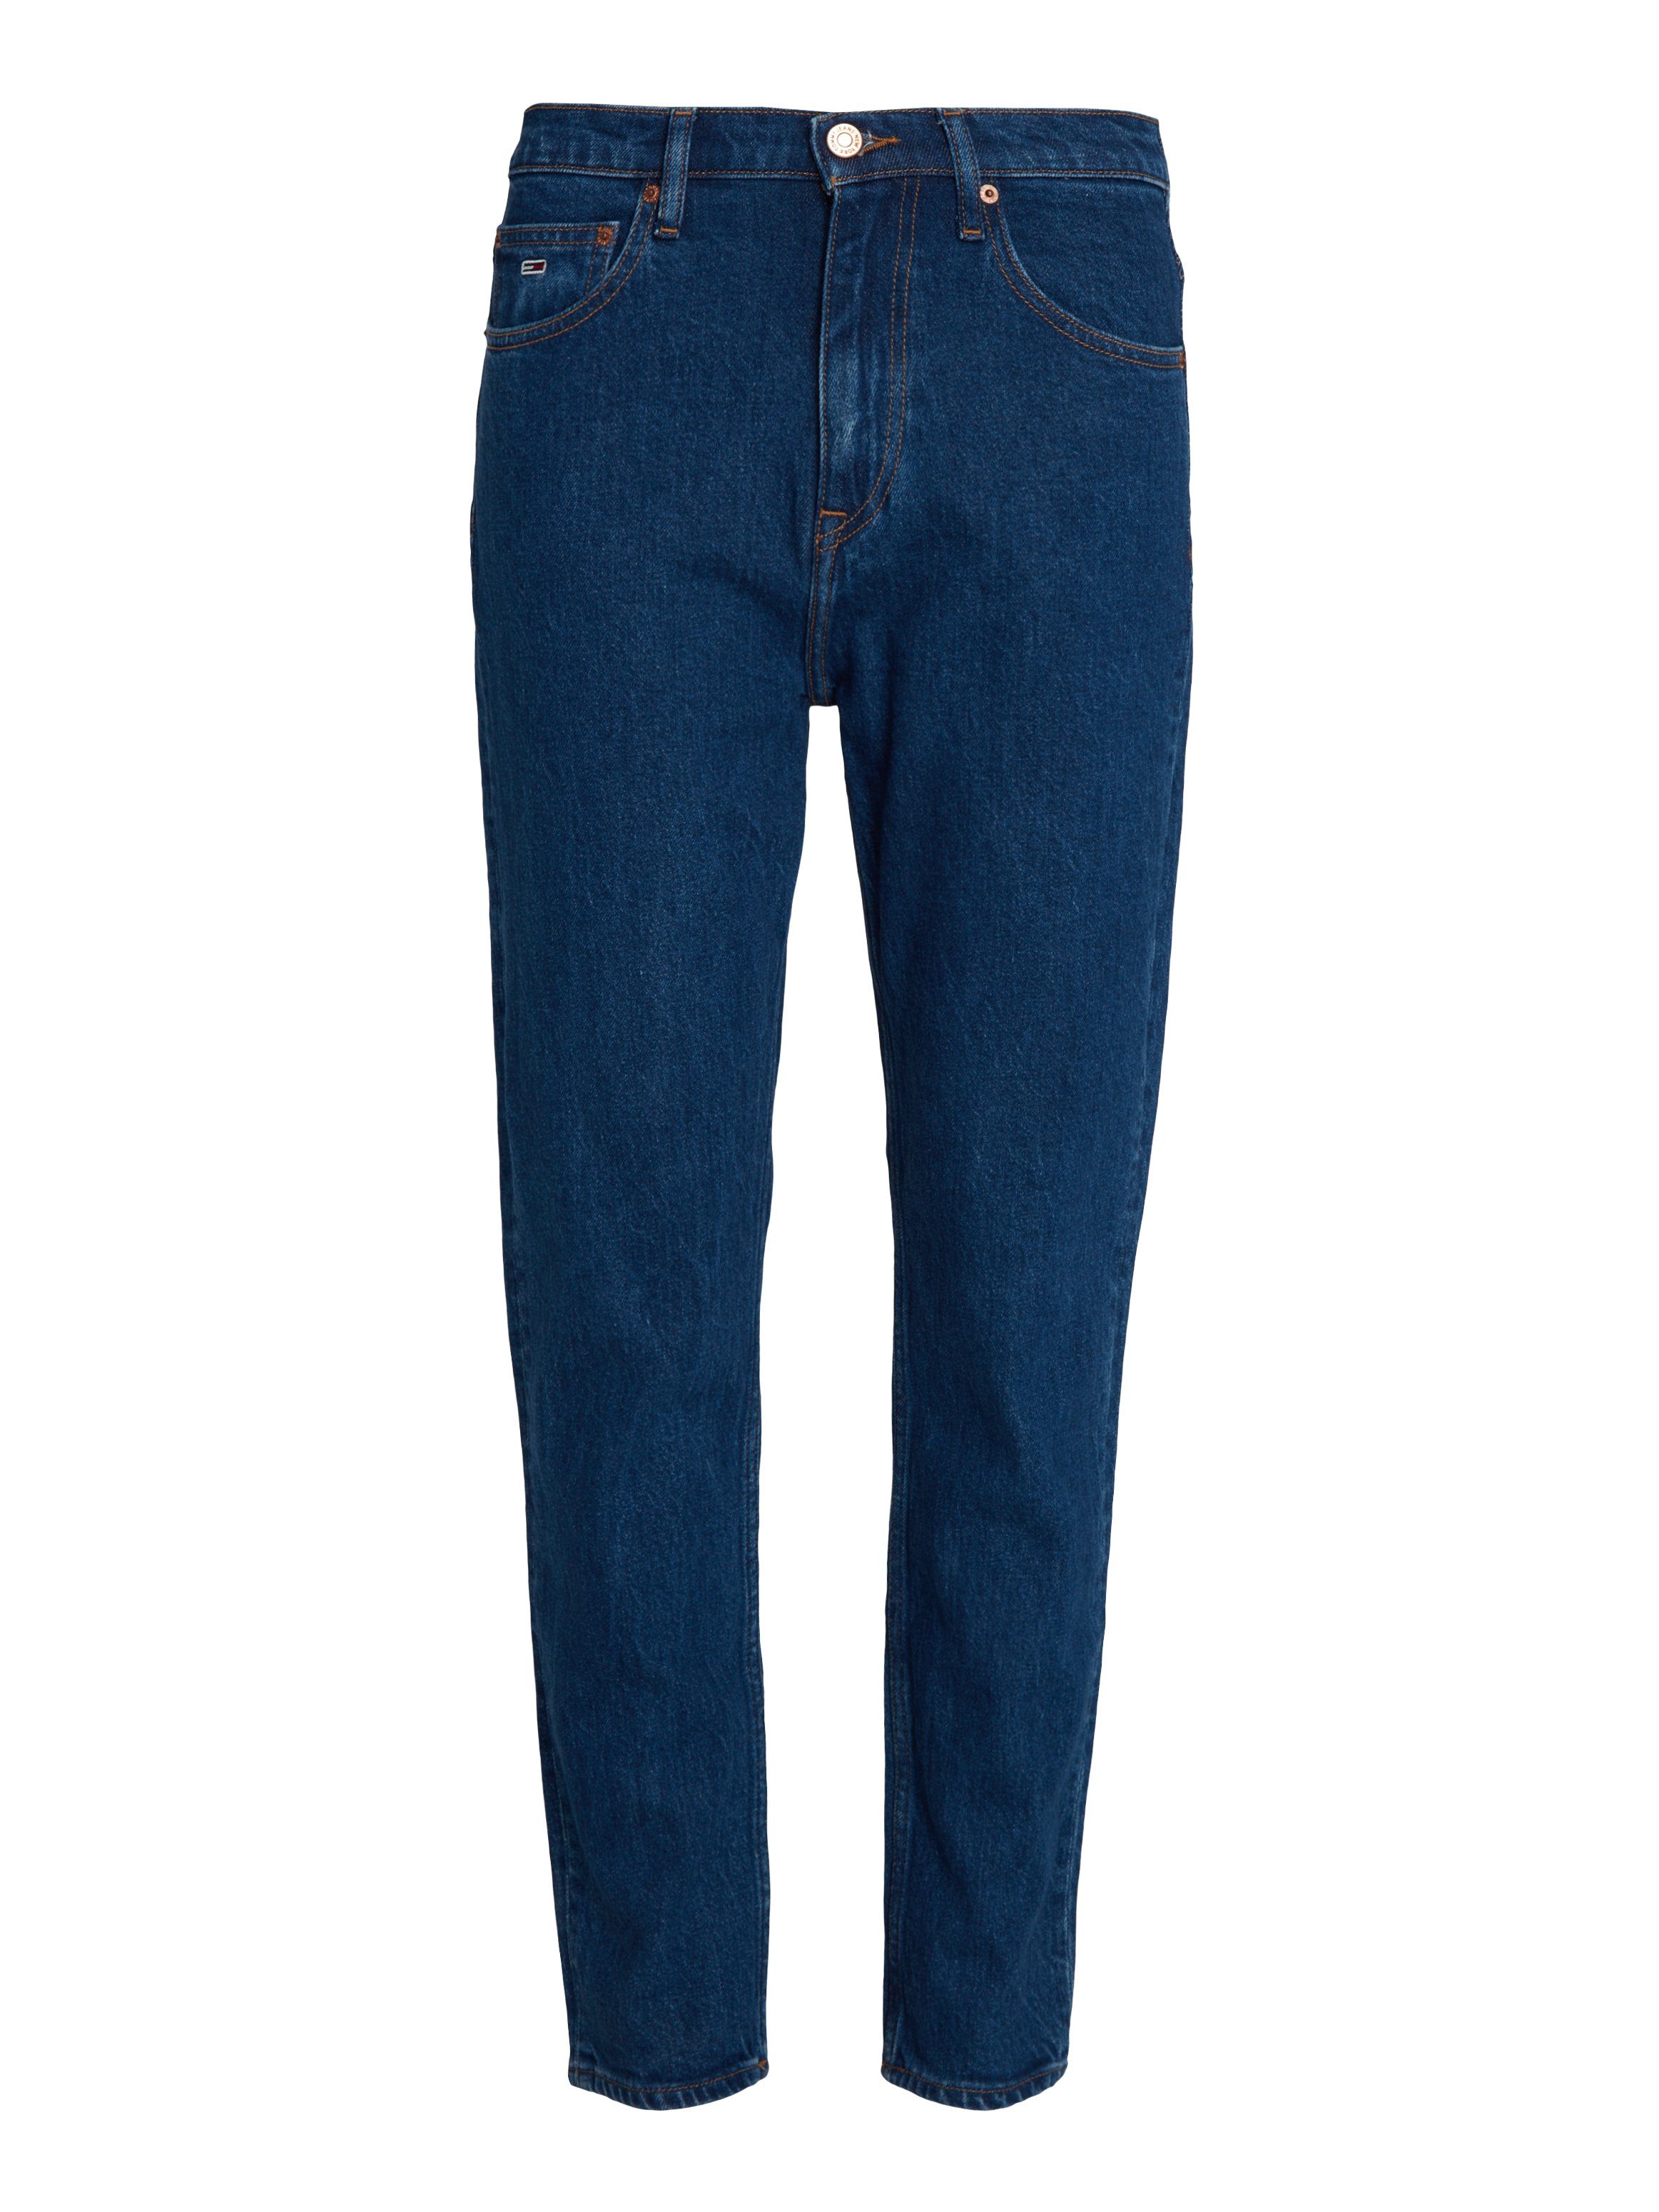 dark ANK blue28 Jeans Slim-fit-Jeans Tommy HGH IZZIE Ledermarkenlabel SL BH5131 mit